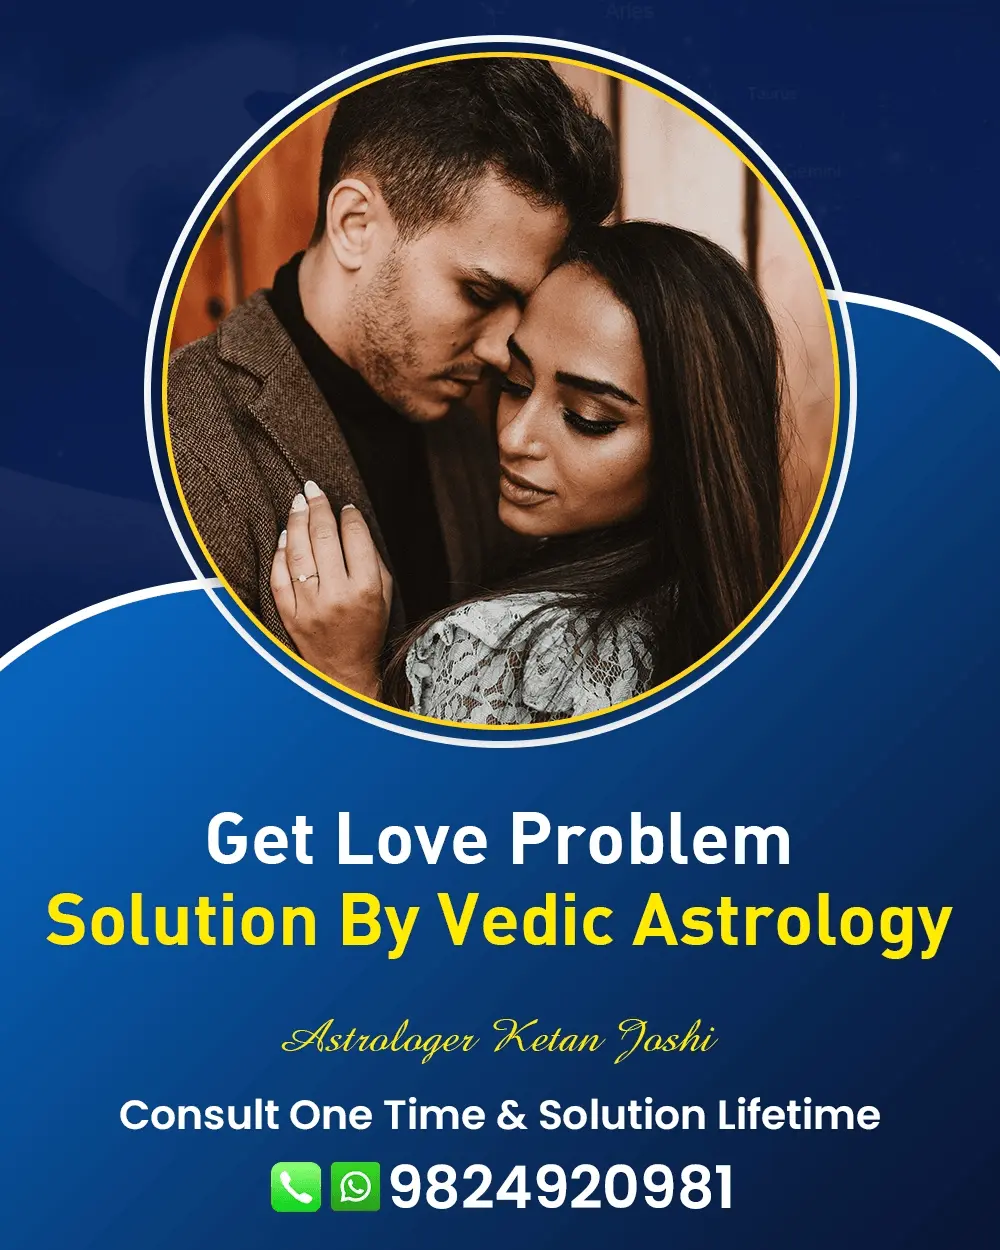 Love Problem Astrologer In Shillong